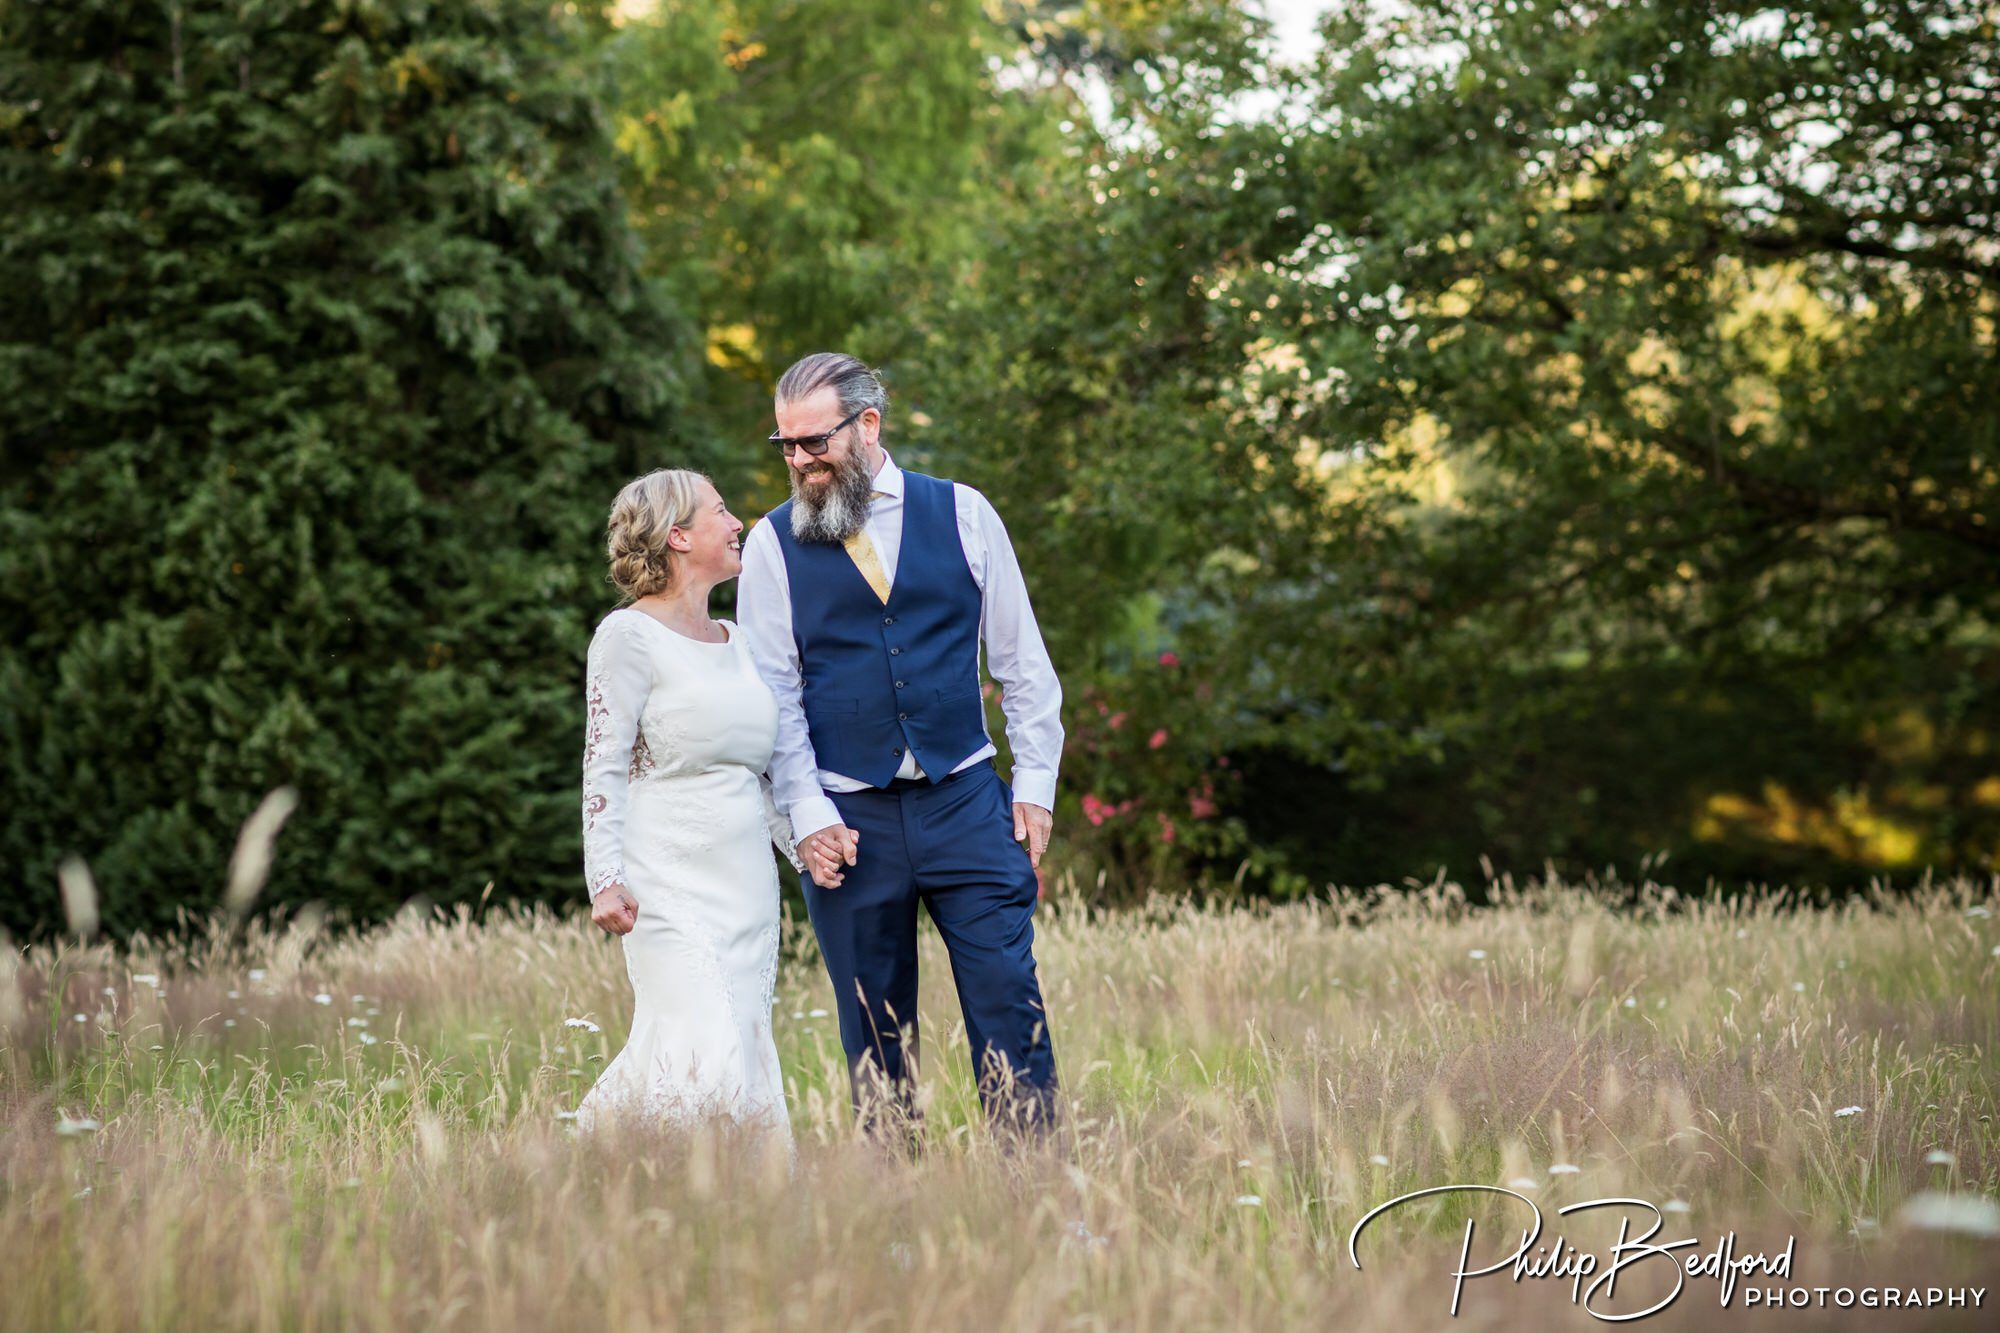 Tara & Dean, Oaks Farm Wedding, Croydon, London